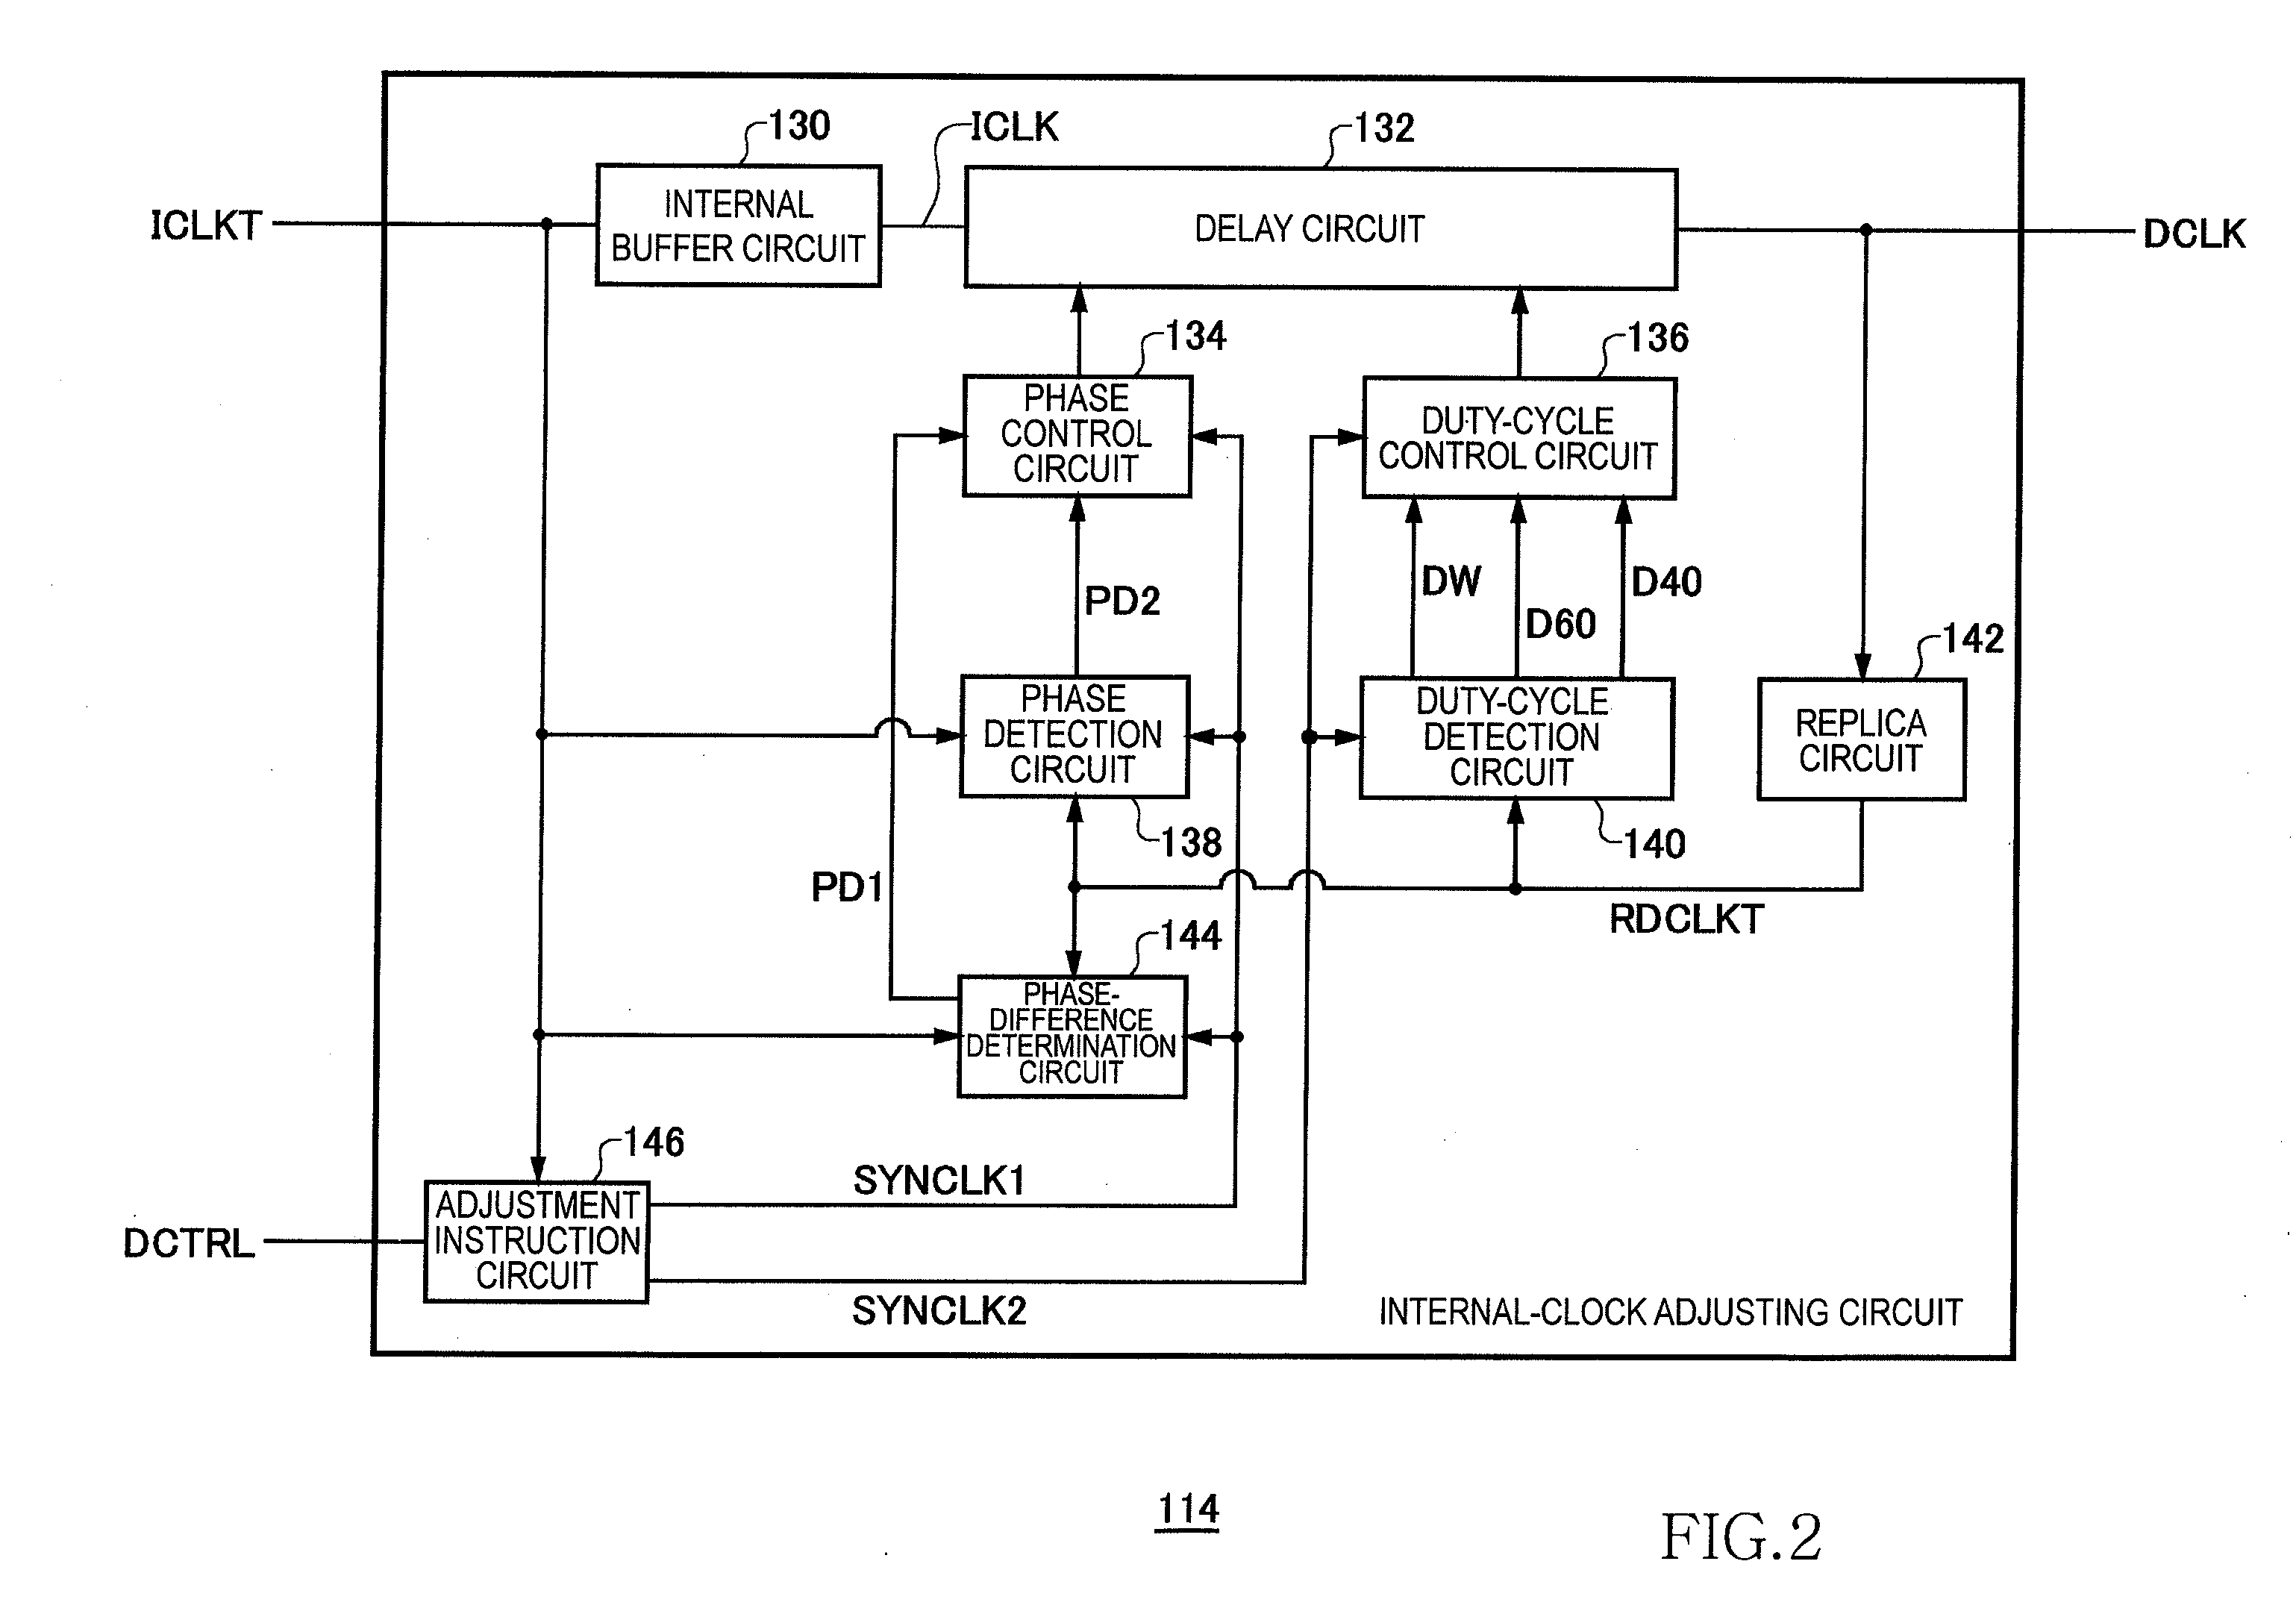 Internal-clock adjusting circuit